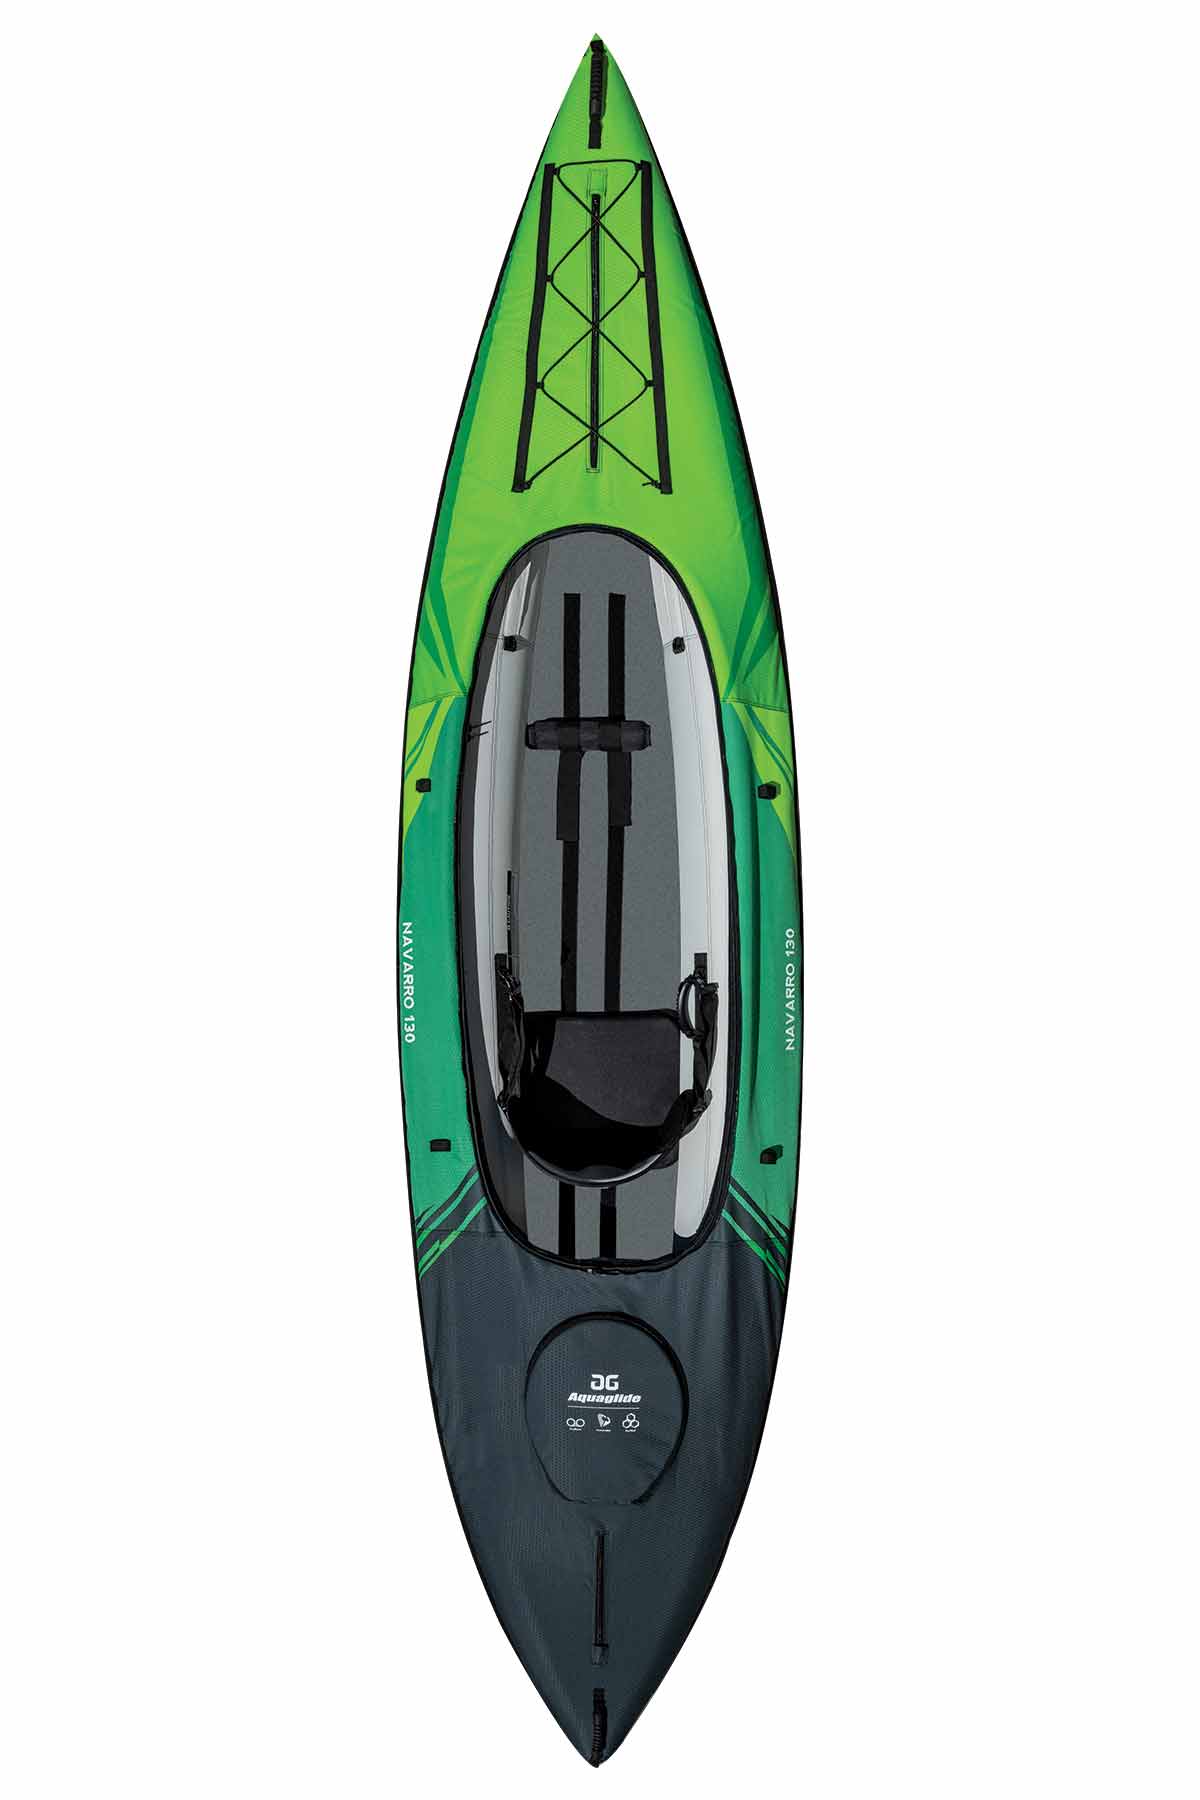 Aquaglide Navarro 130 Inflatable Kayak Top View